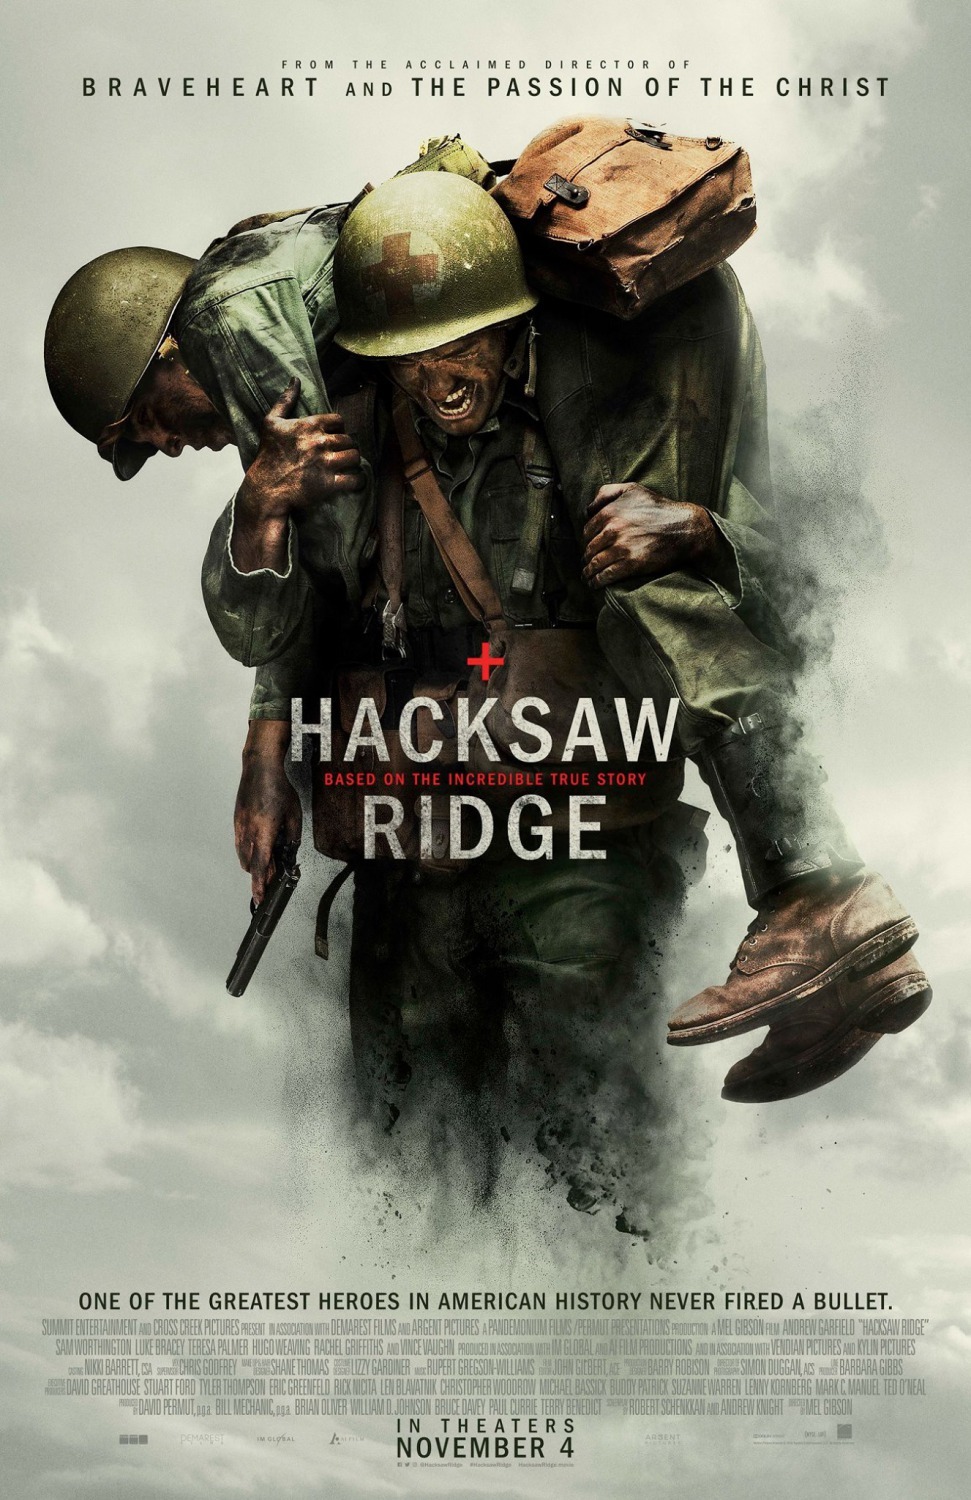 Nonton film Hacksaw Ridge layarkaca21 indoxx1 ganool online streaming terbaru